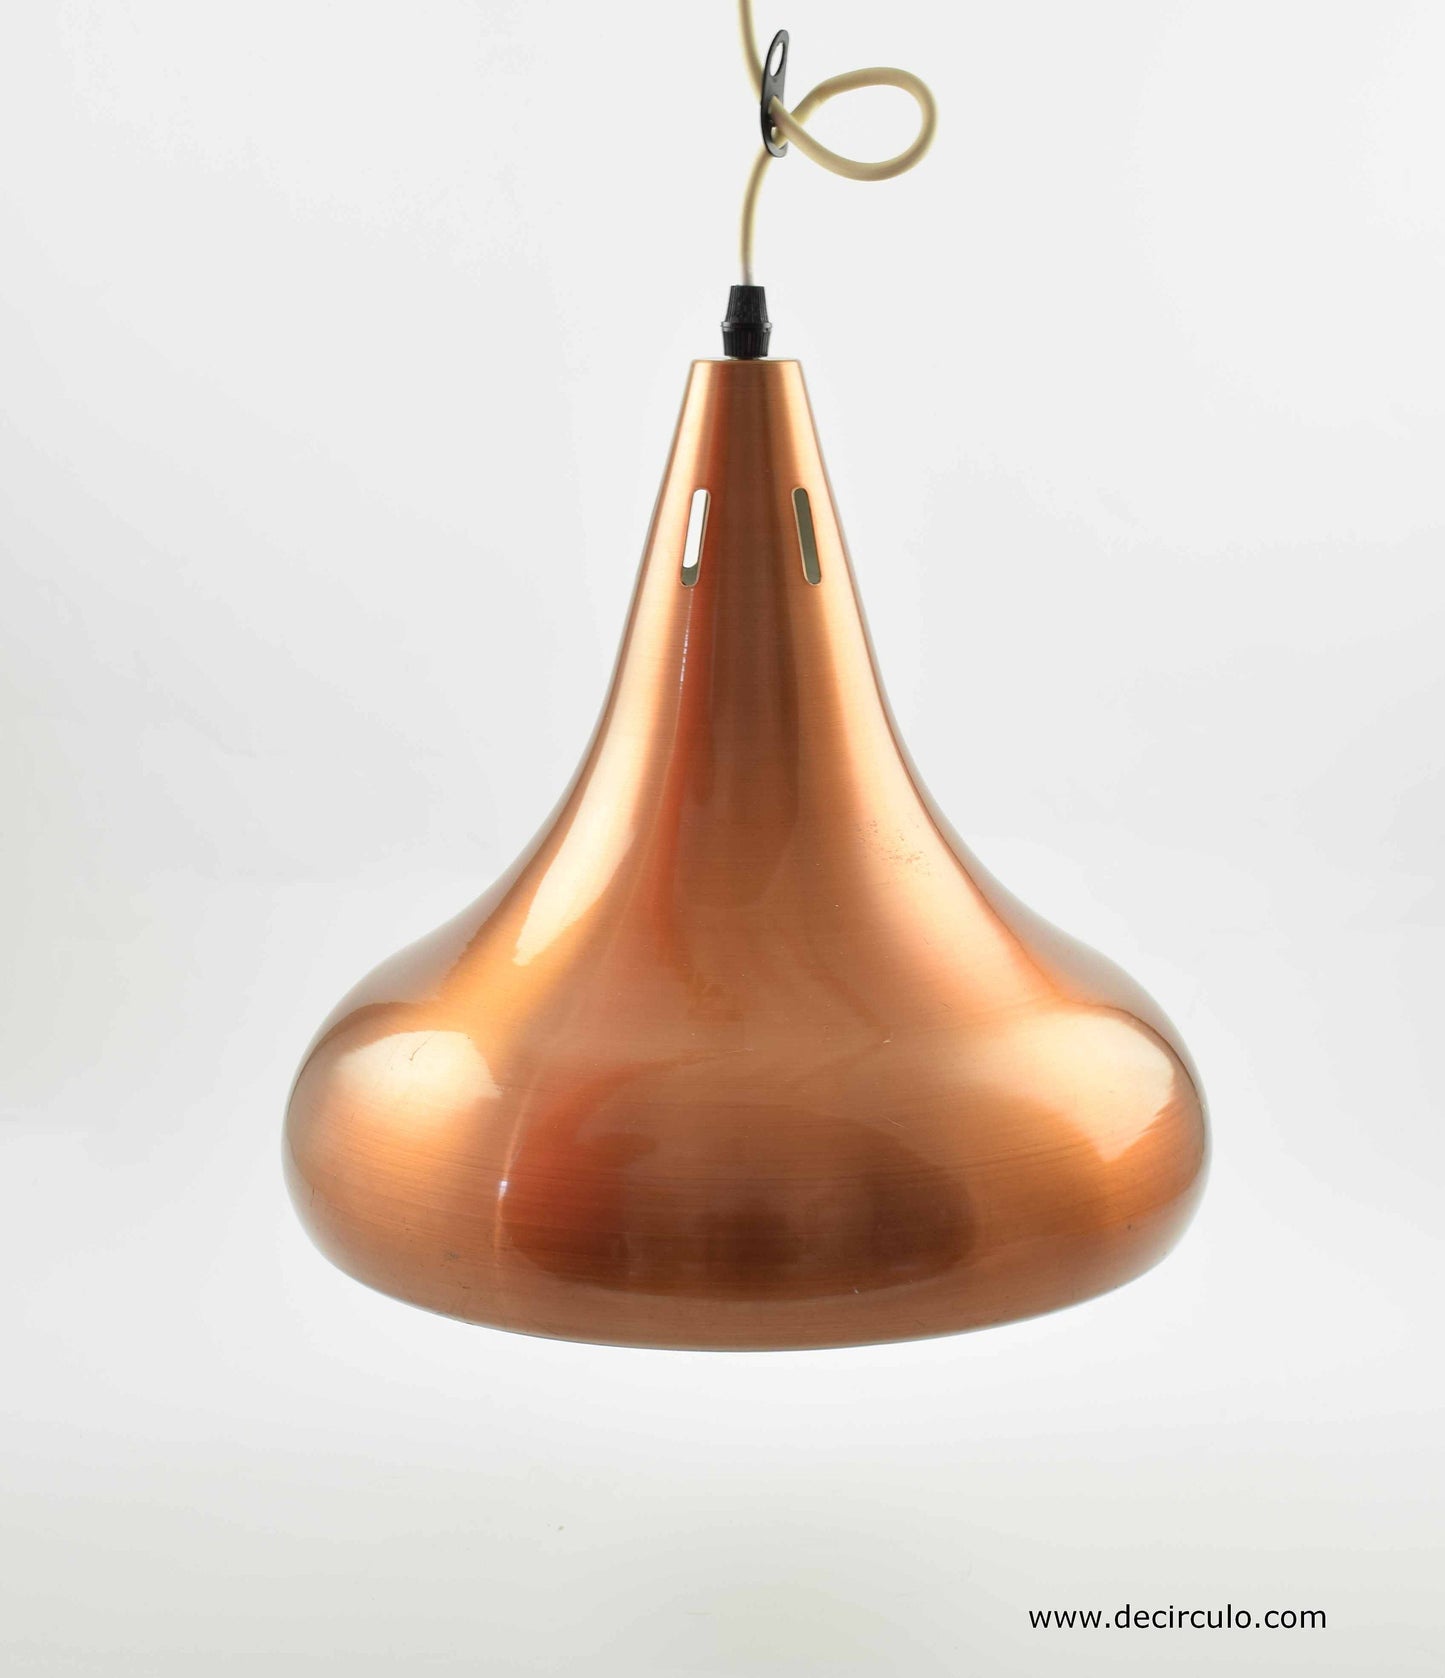 Brushed alumininum copper colored carambole billiard lamp